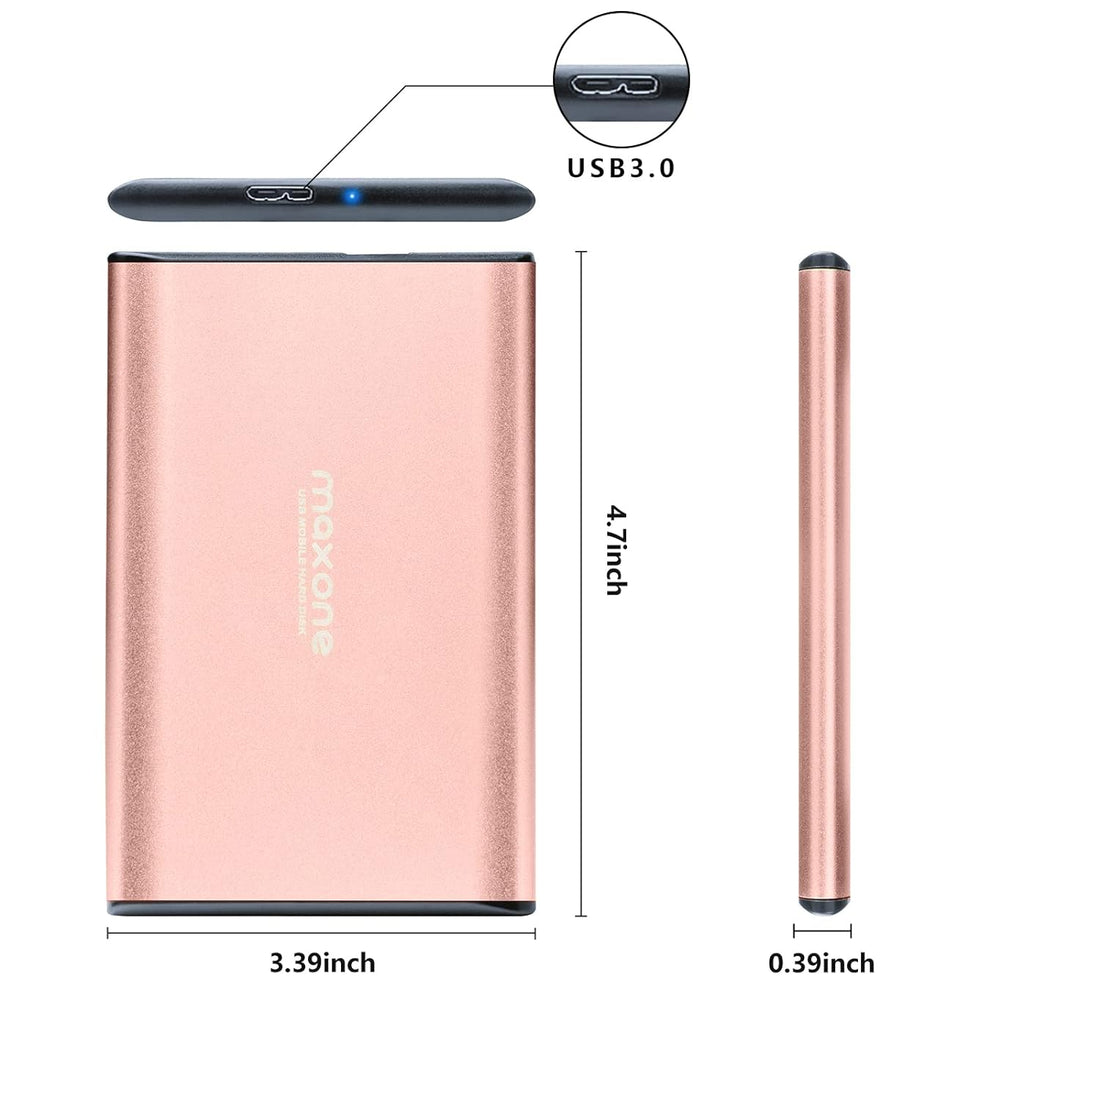 500GB Portable External Hard Drives- 2.5 Inch Ultra Slim External Hard Drives USB 3.0 for Laptop,Desktop,Xbox one,PS4,Mac,Chromebook